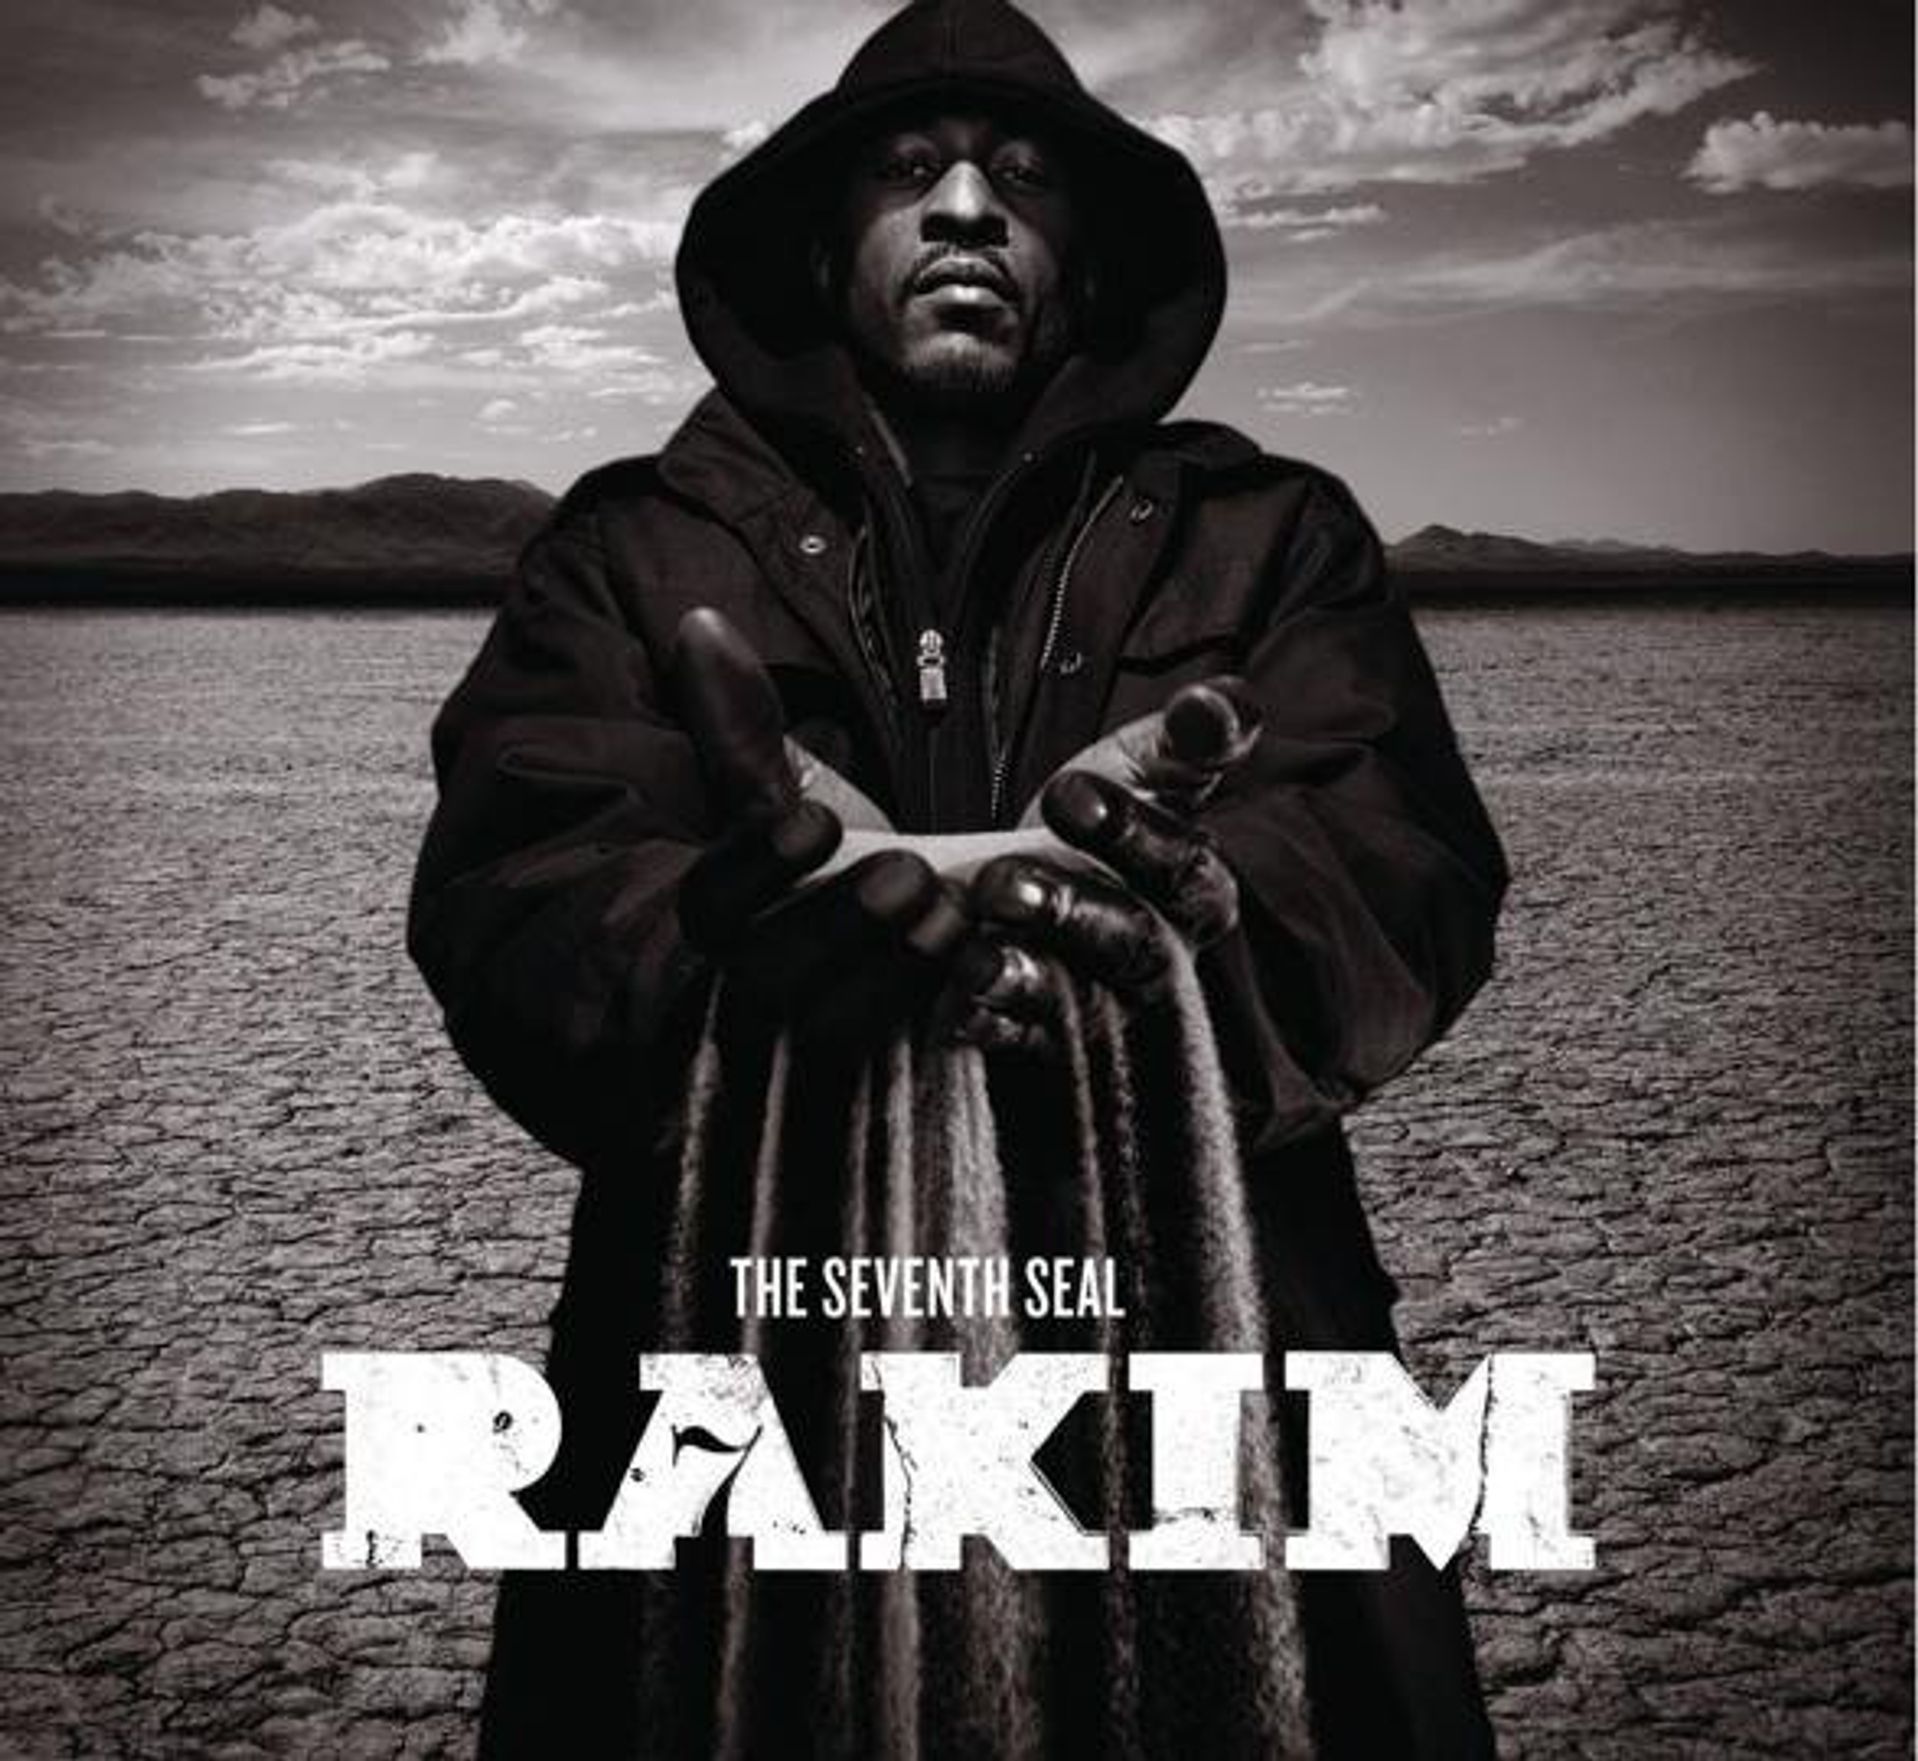 Album Title: The Seventh Seal by: Rakim